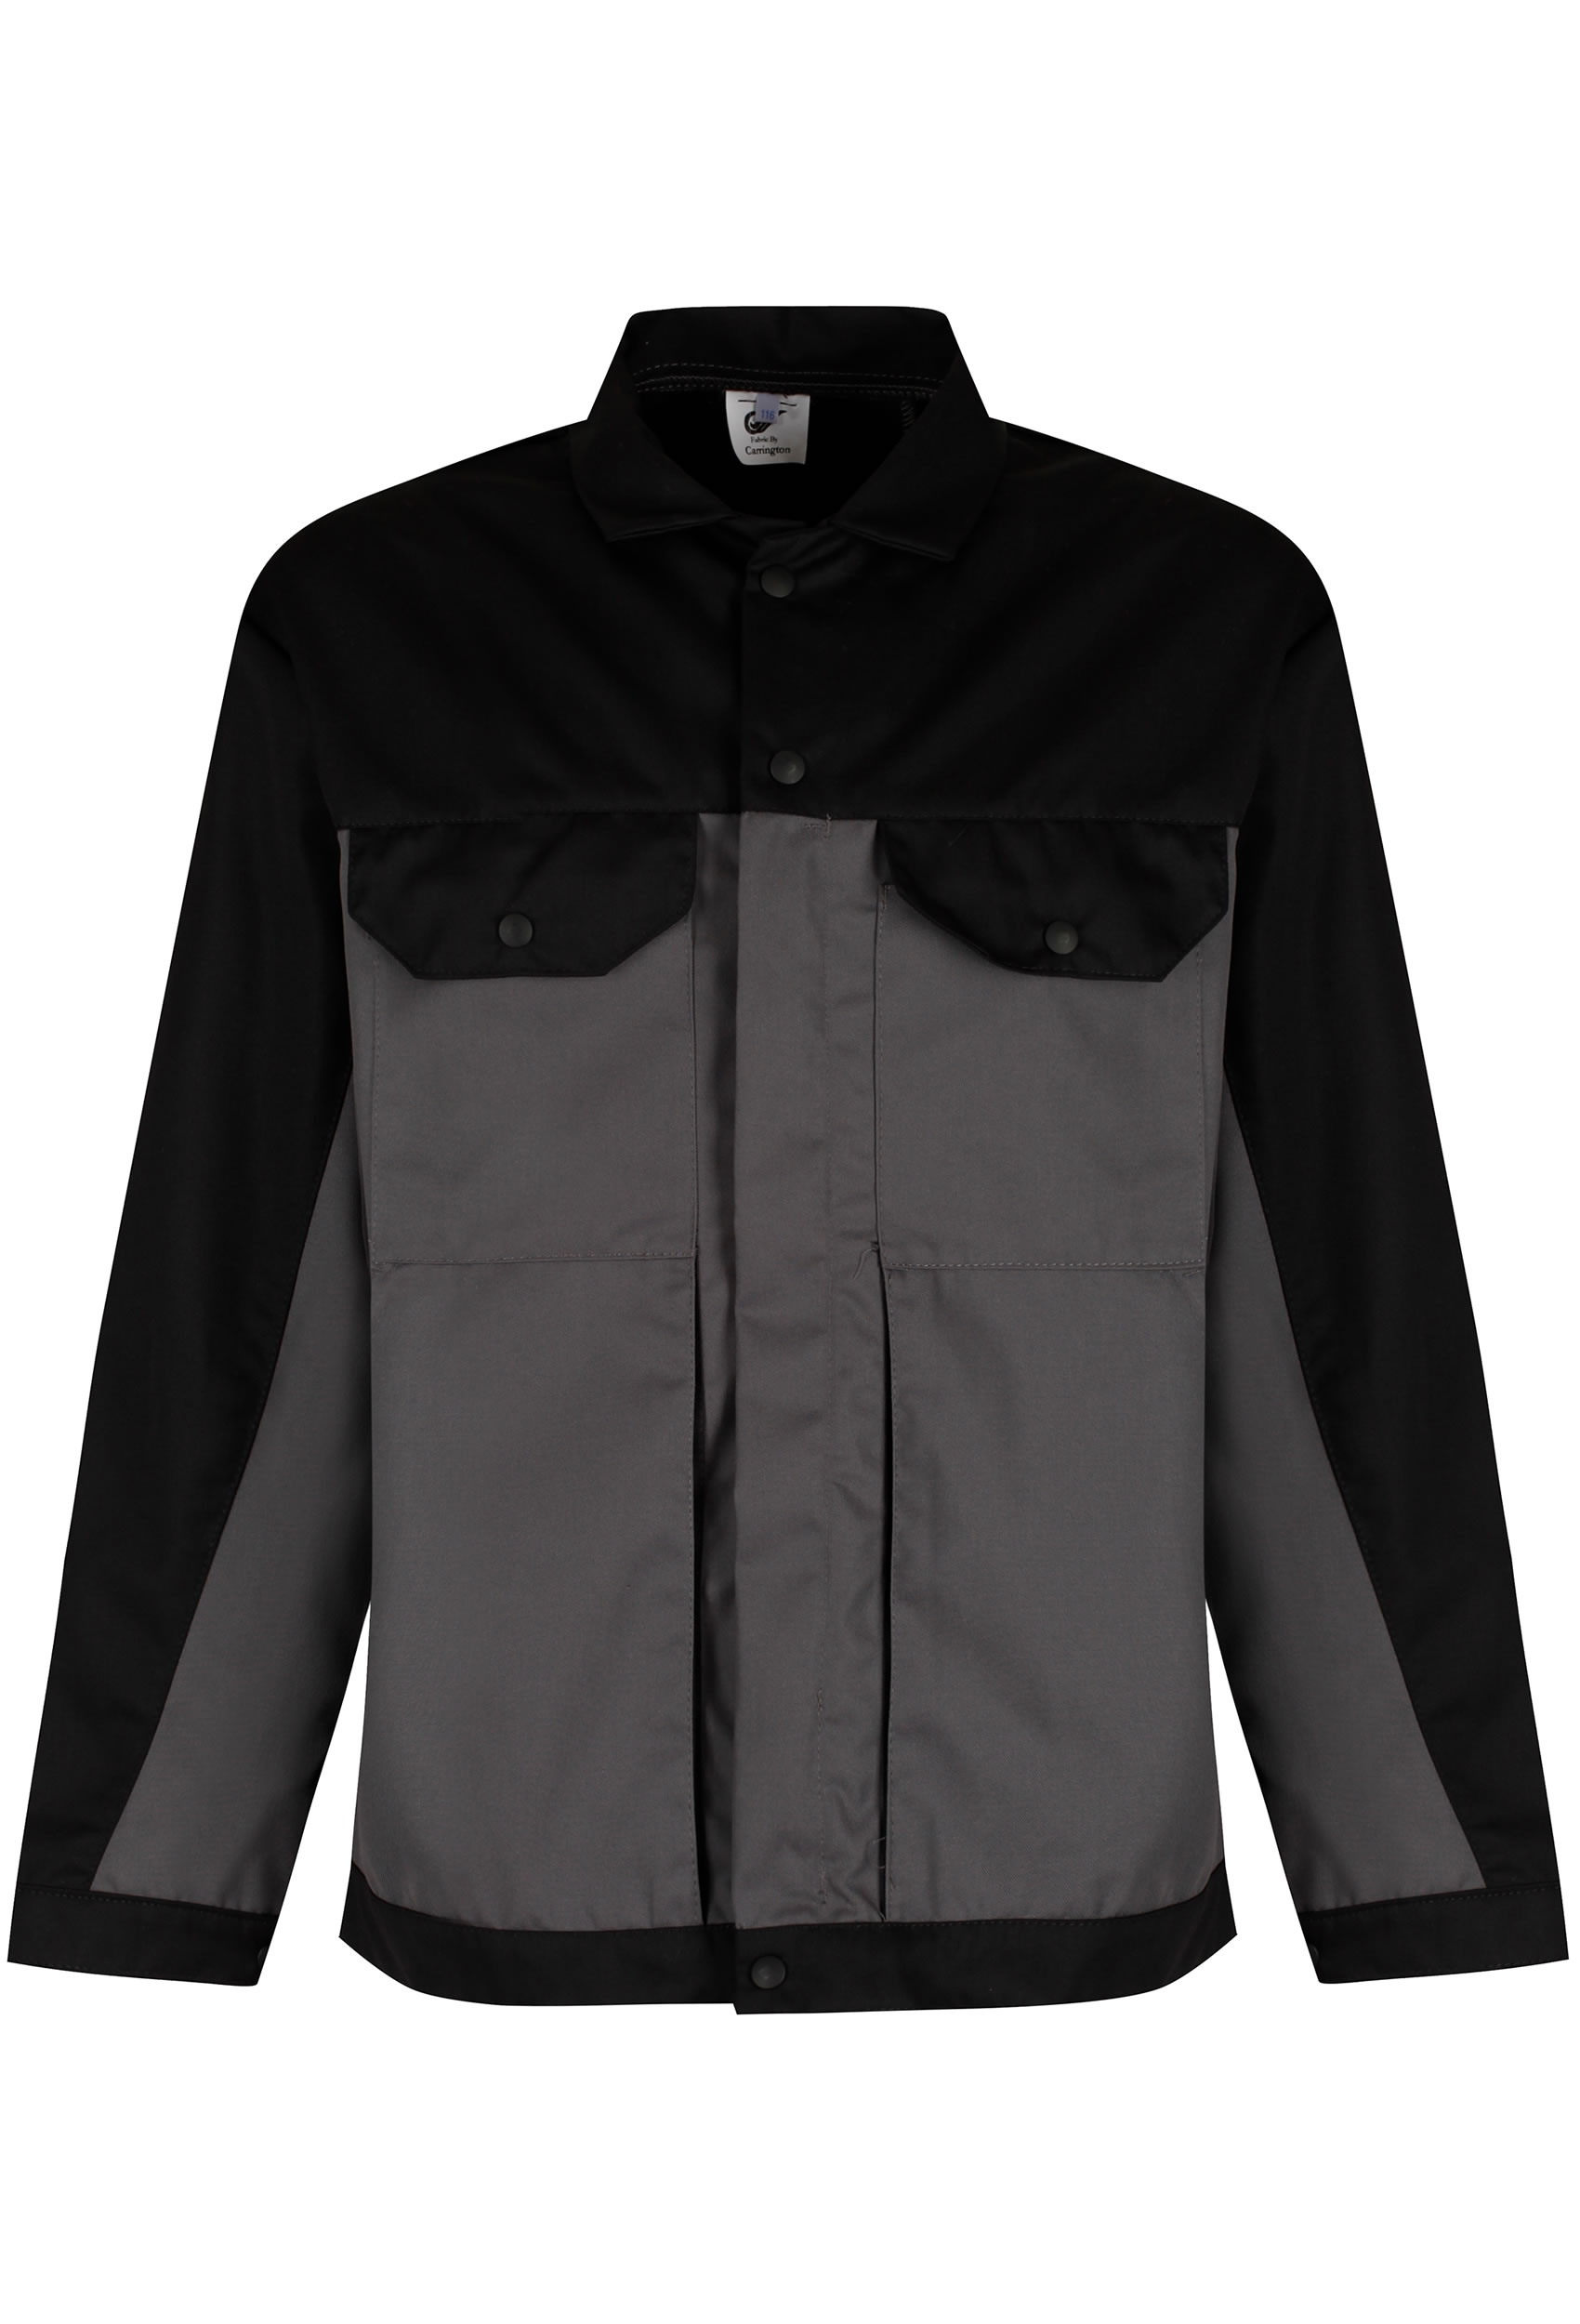 Style 4781 Two-tone flame retardant jacket.jpg - Workwear Garments - CLEAN Services